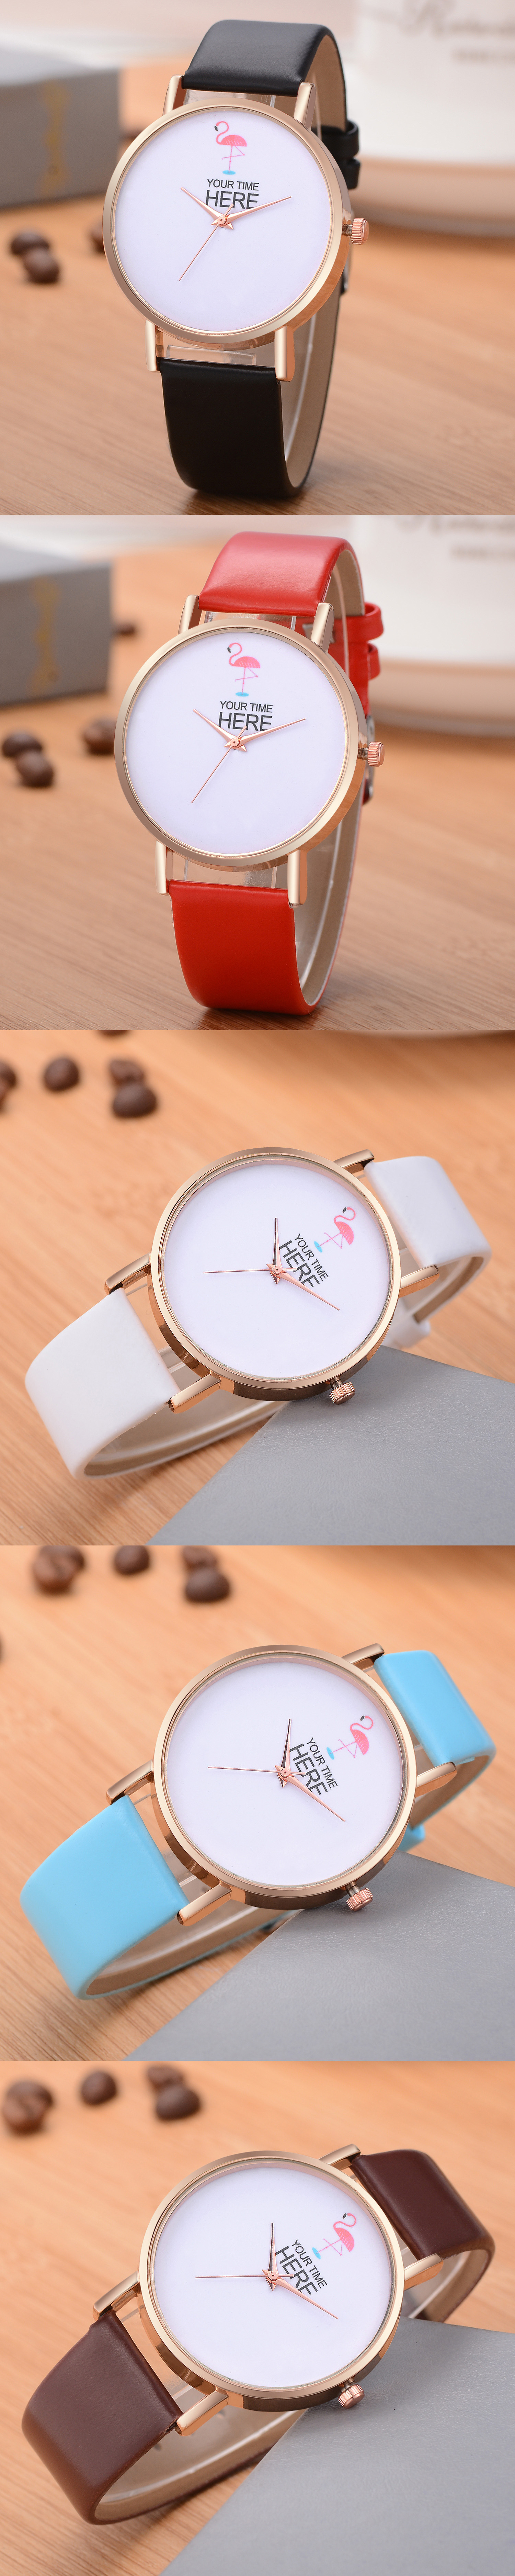 Casual-Style-Women-Wrist-Watch-Rose-Gold-Case-Leather-Strap-Quartz-Watch-1324863